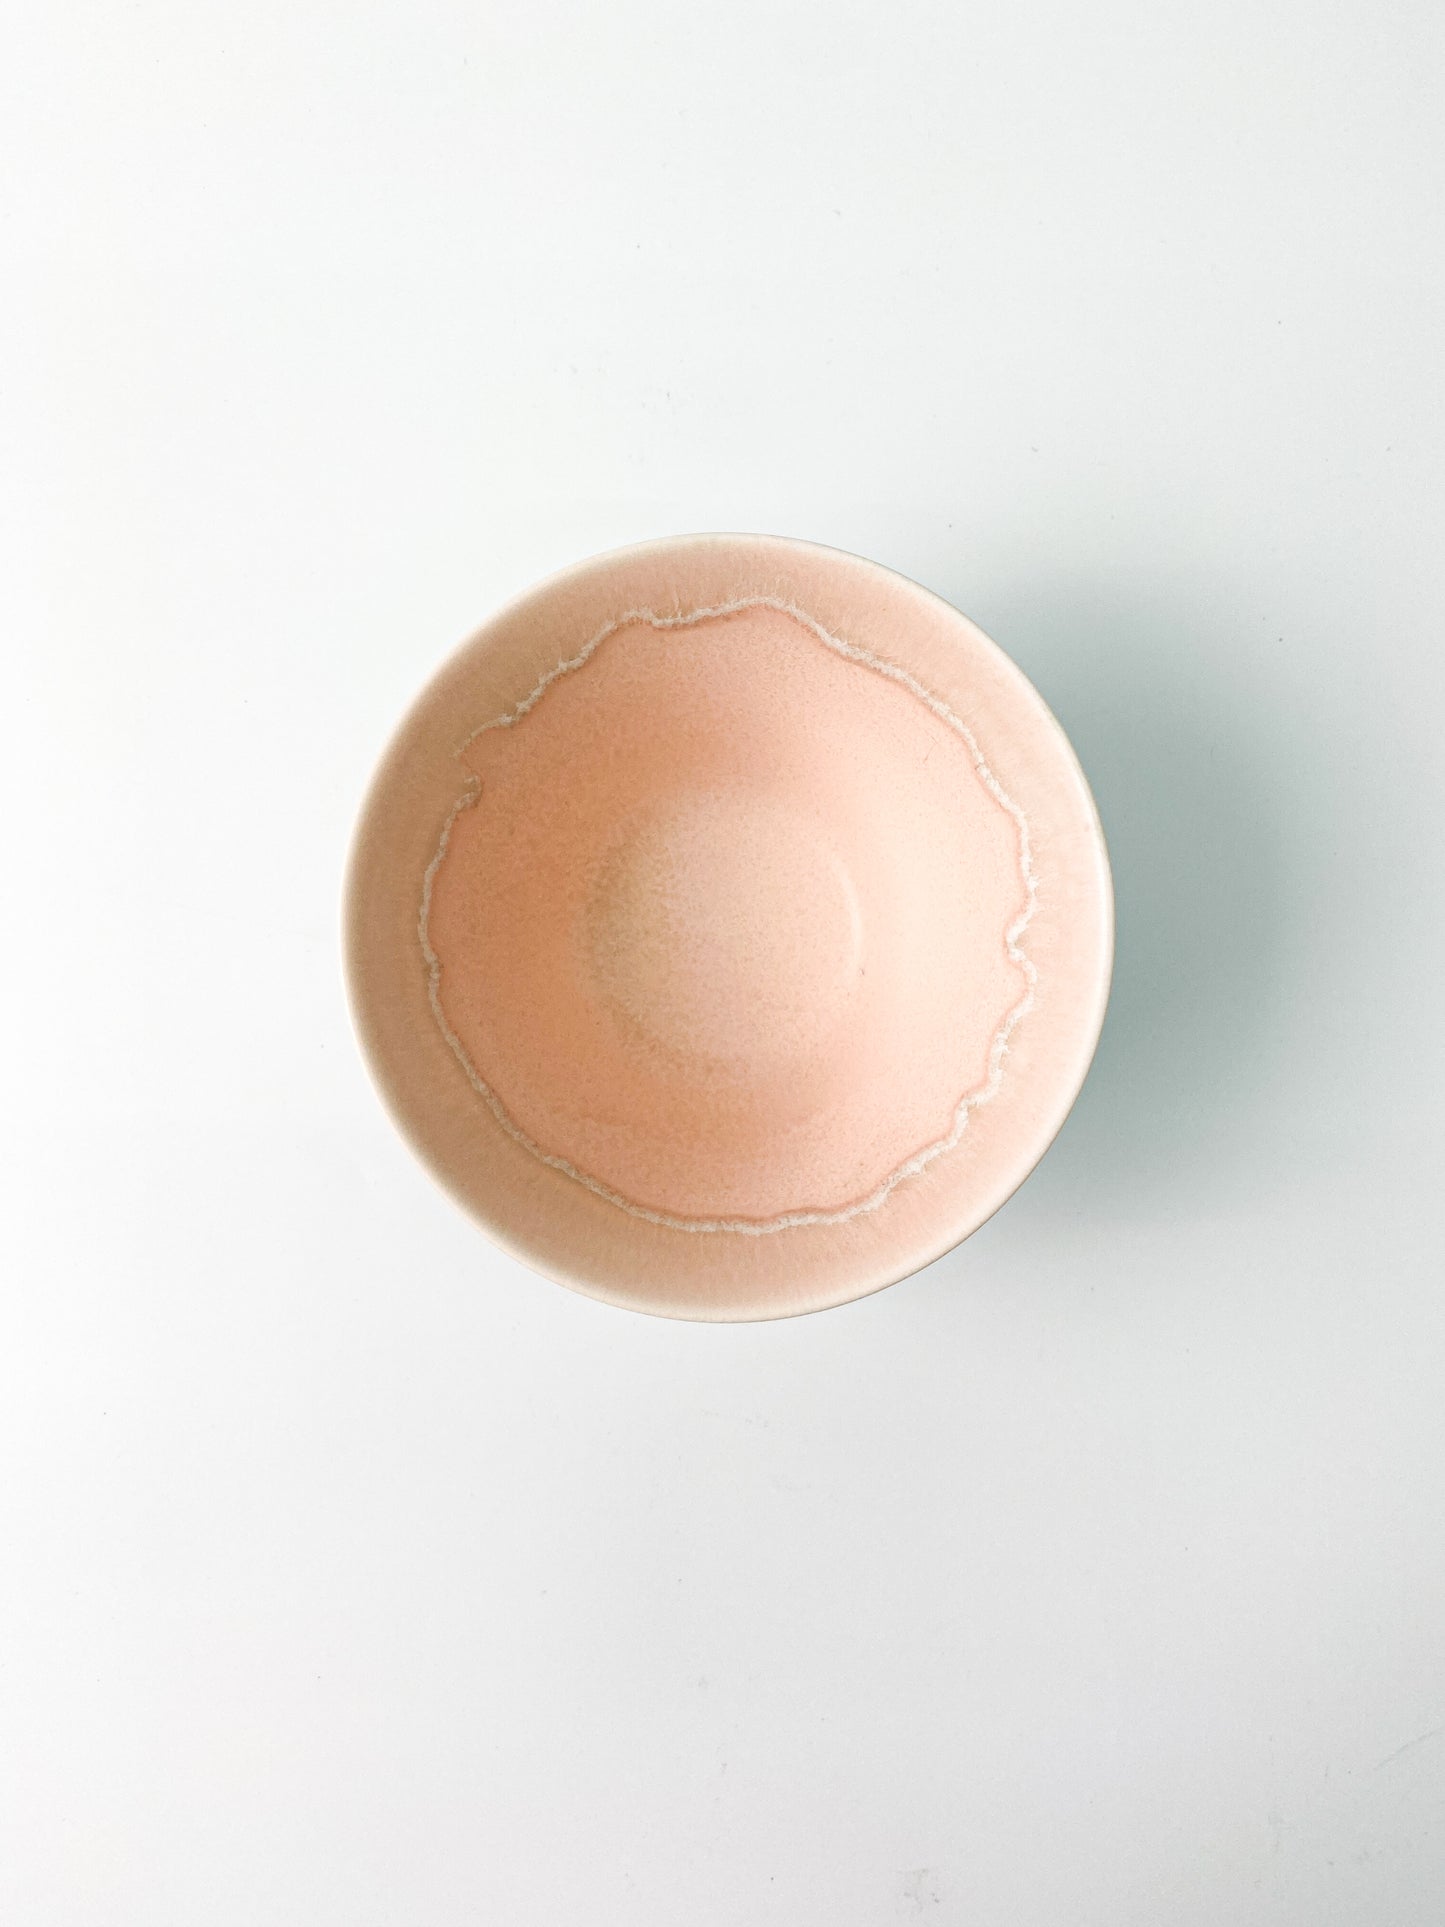 日本製美濃燒 伸光窯粉彩飯碗 (粉藍色) | Japanese Mino Ware Shinko Kiln Pastel Bowl (Pink x Blue)